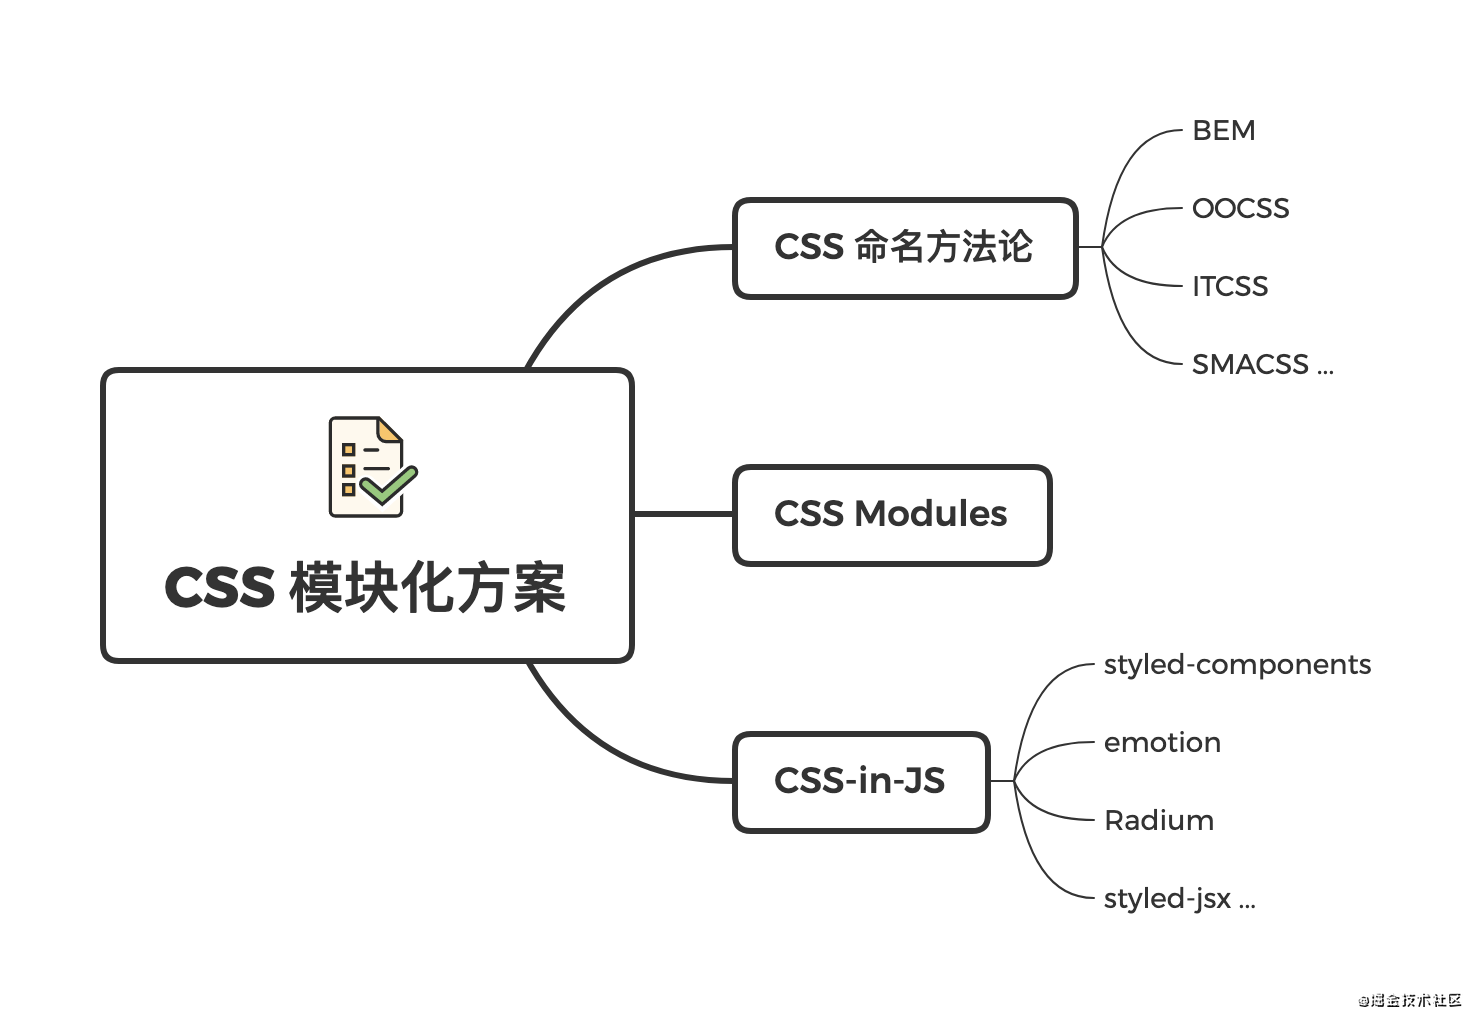 CSS 模块化方案探讨（BEM、OOCSS、CSS Modules、CSS-in-JS ...）